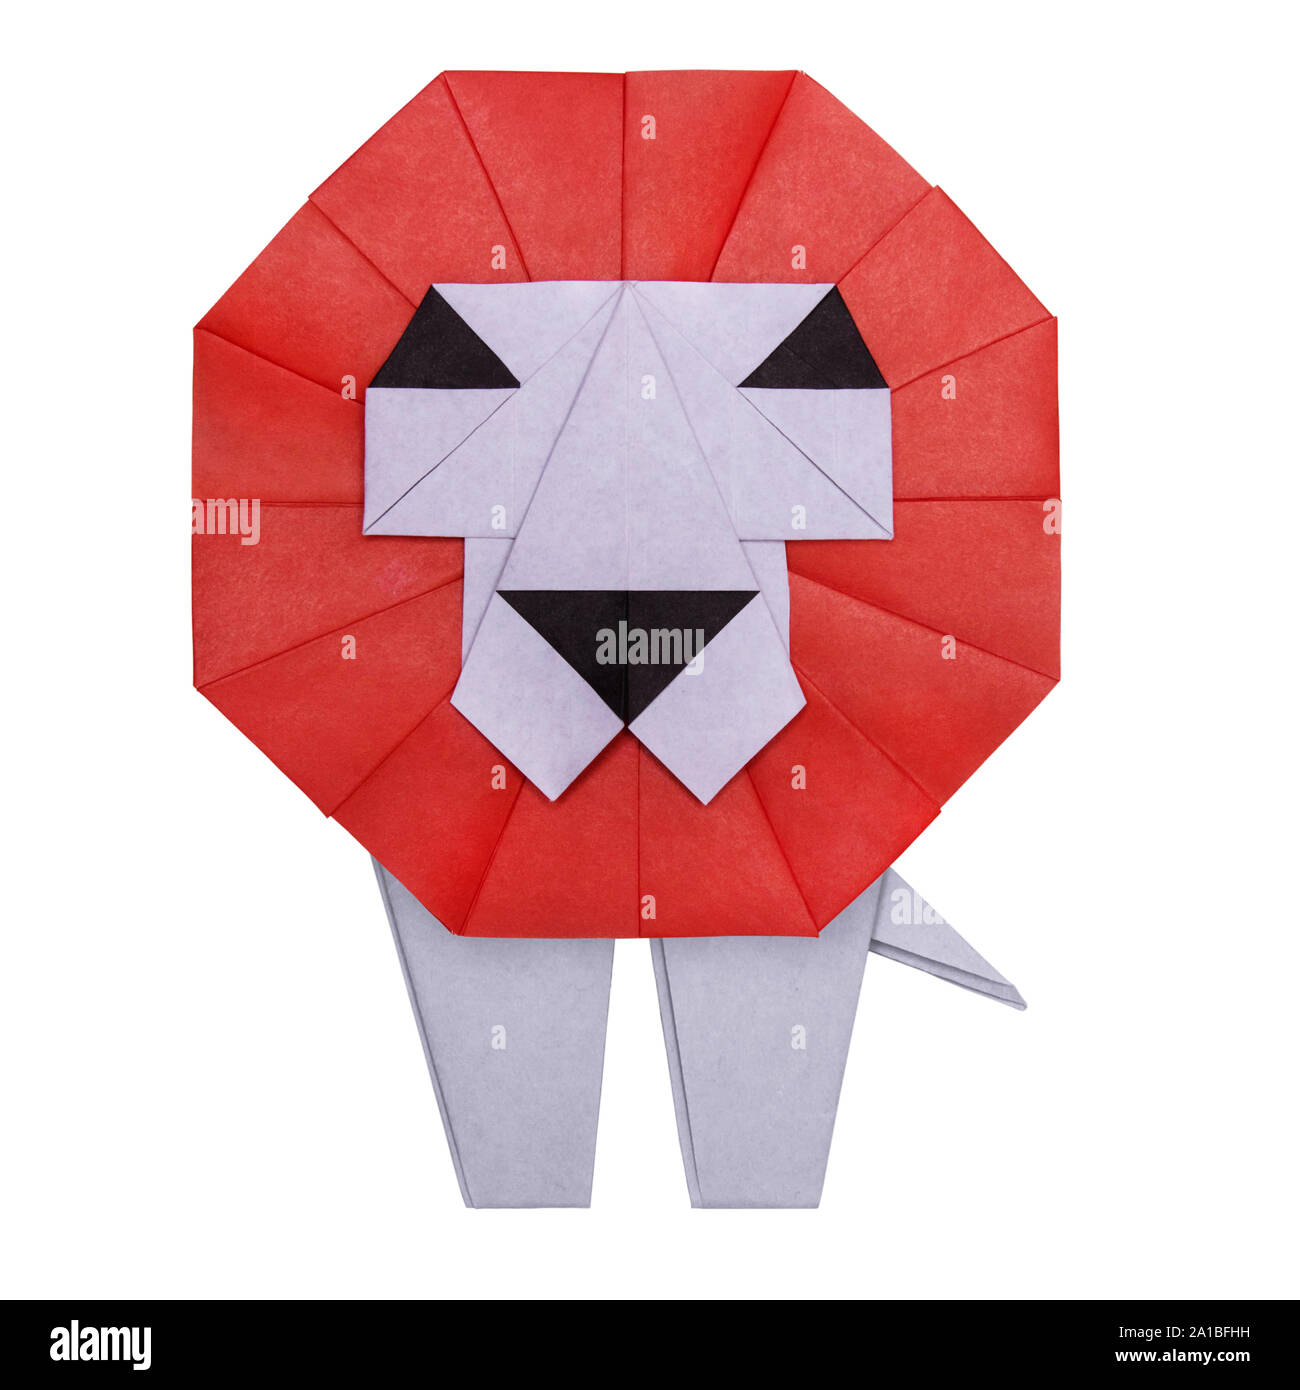 Origami TESTA LEONE Foto Stock